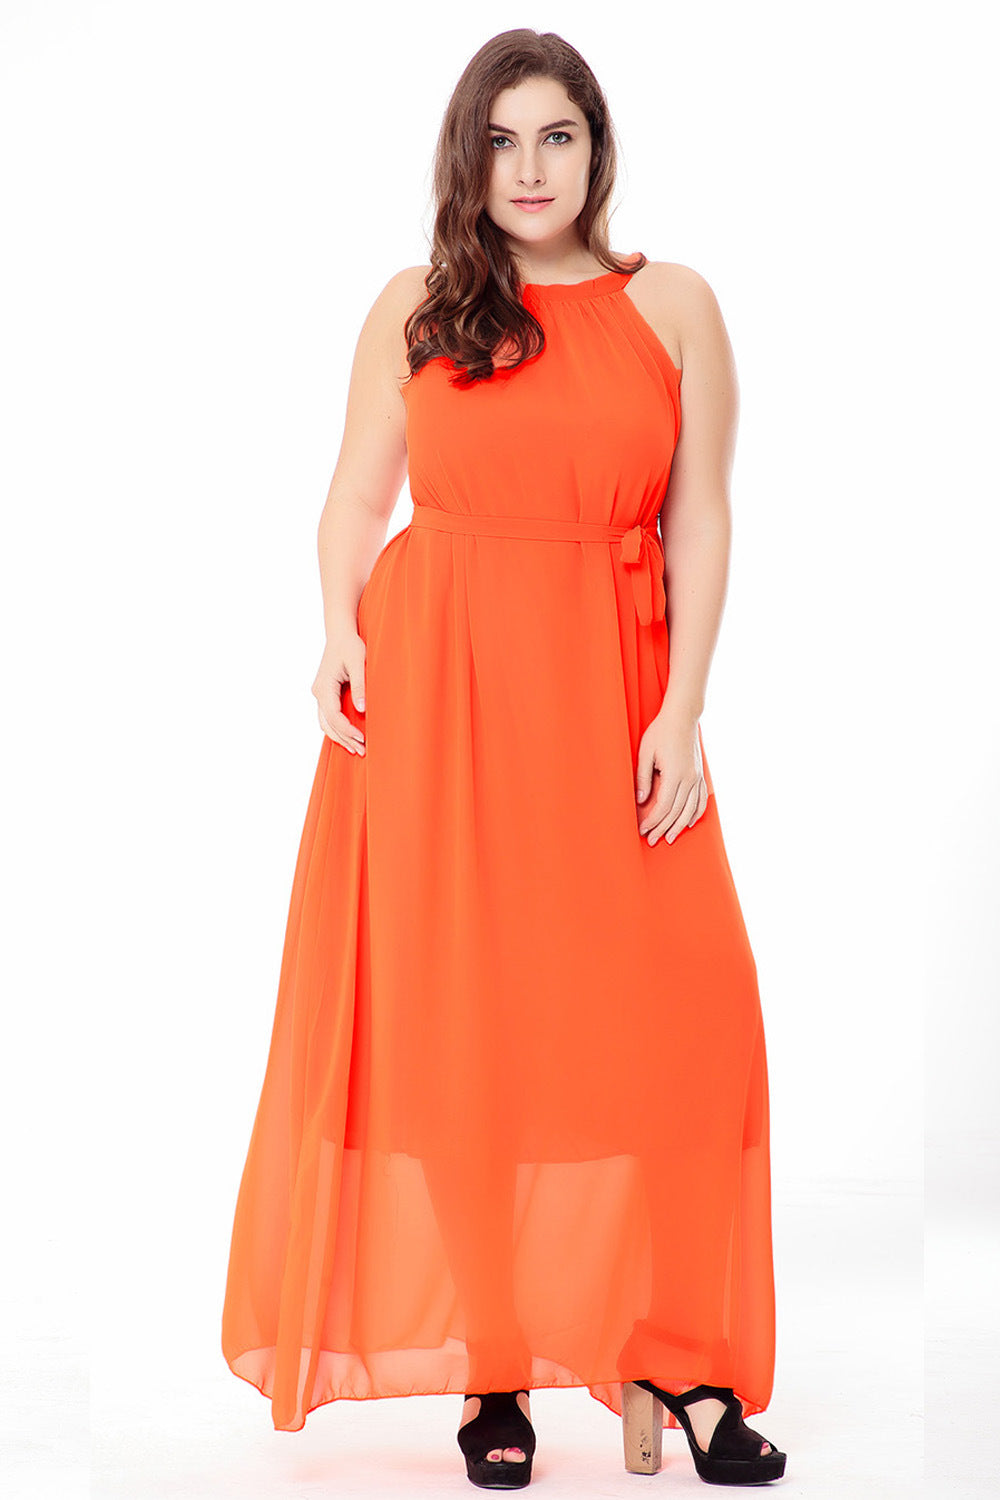 Summer Boho Plus Sizes Chiffon Dresses-Maxi Dresses-Orange-L-US 12-Free Shipping at meselling99